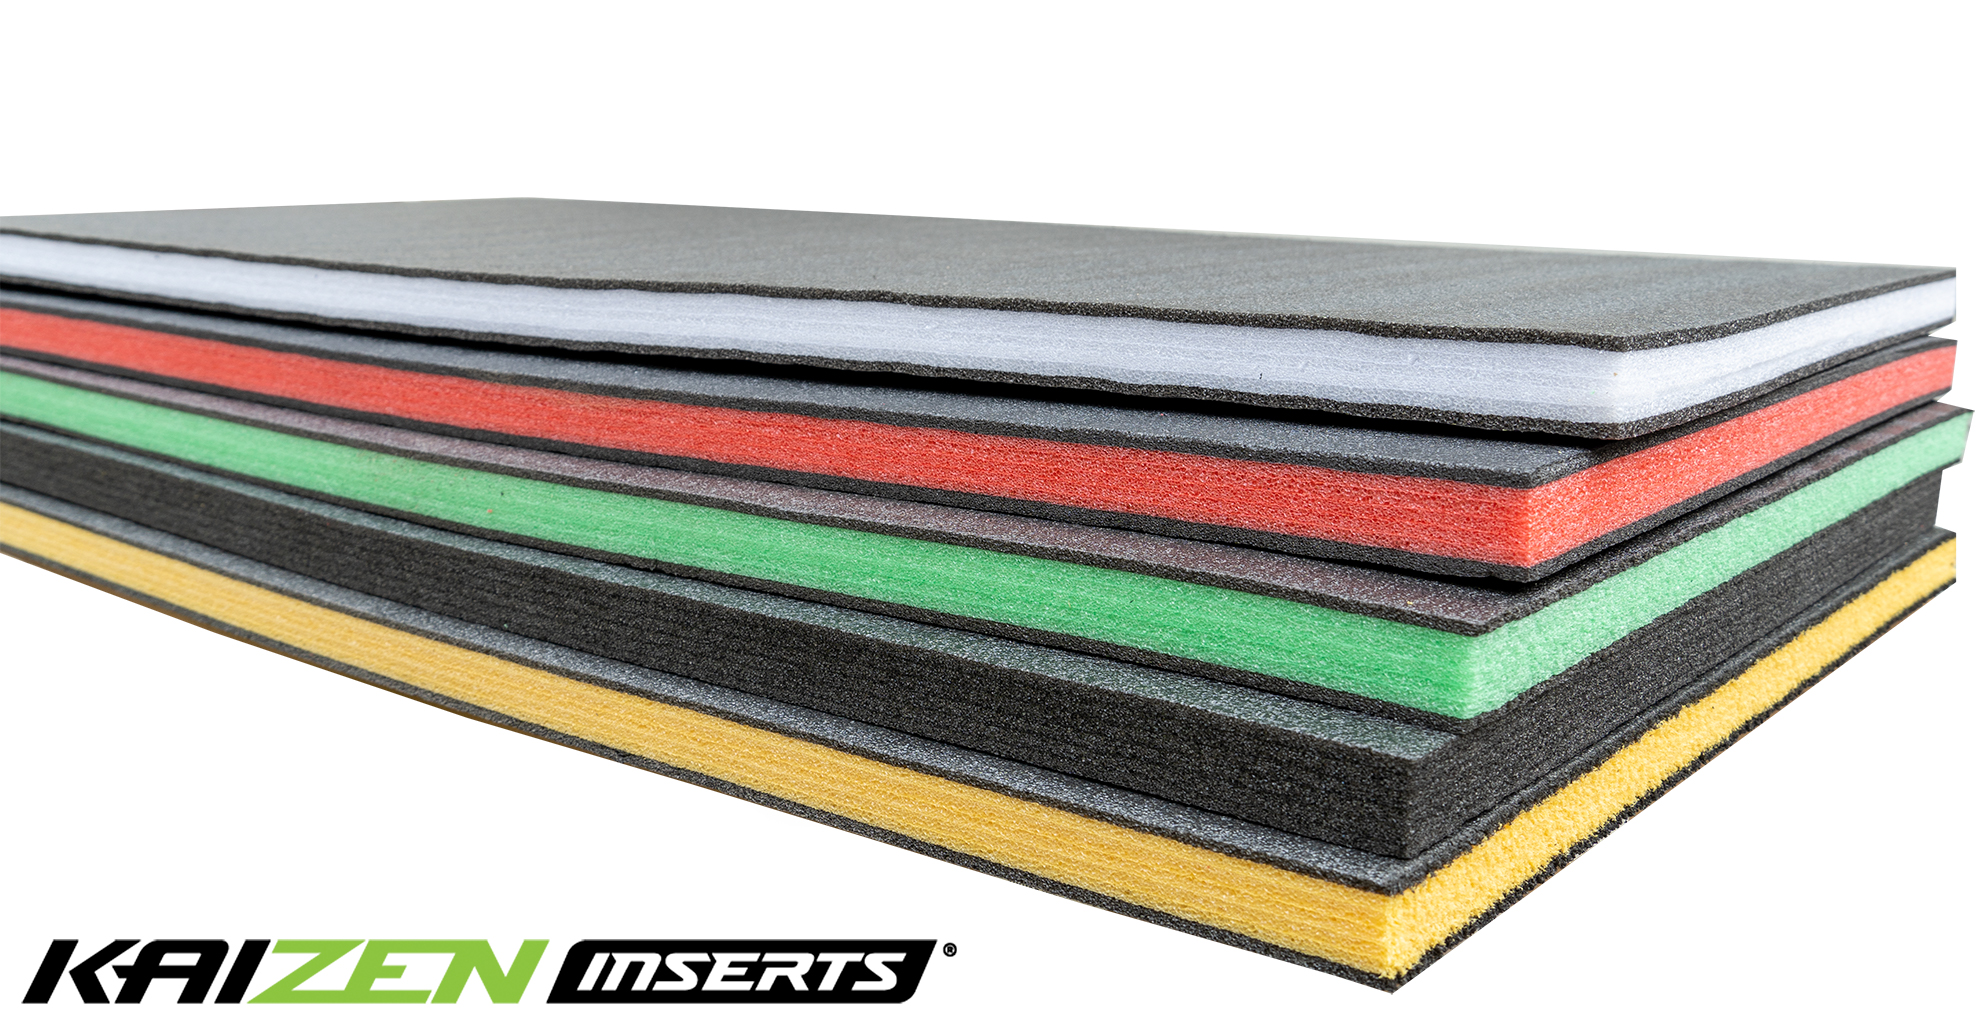 FastCap - Kaizen Foam Sheets  12✕24 30mm Thick - 2 Pack (Black